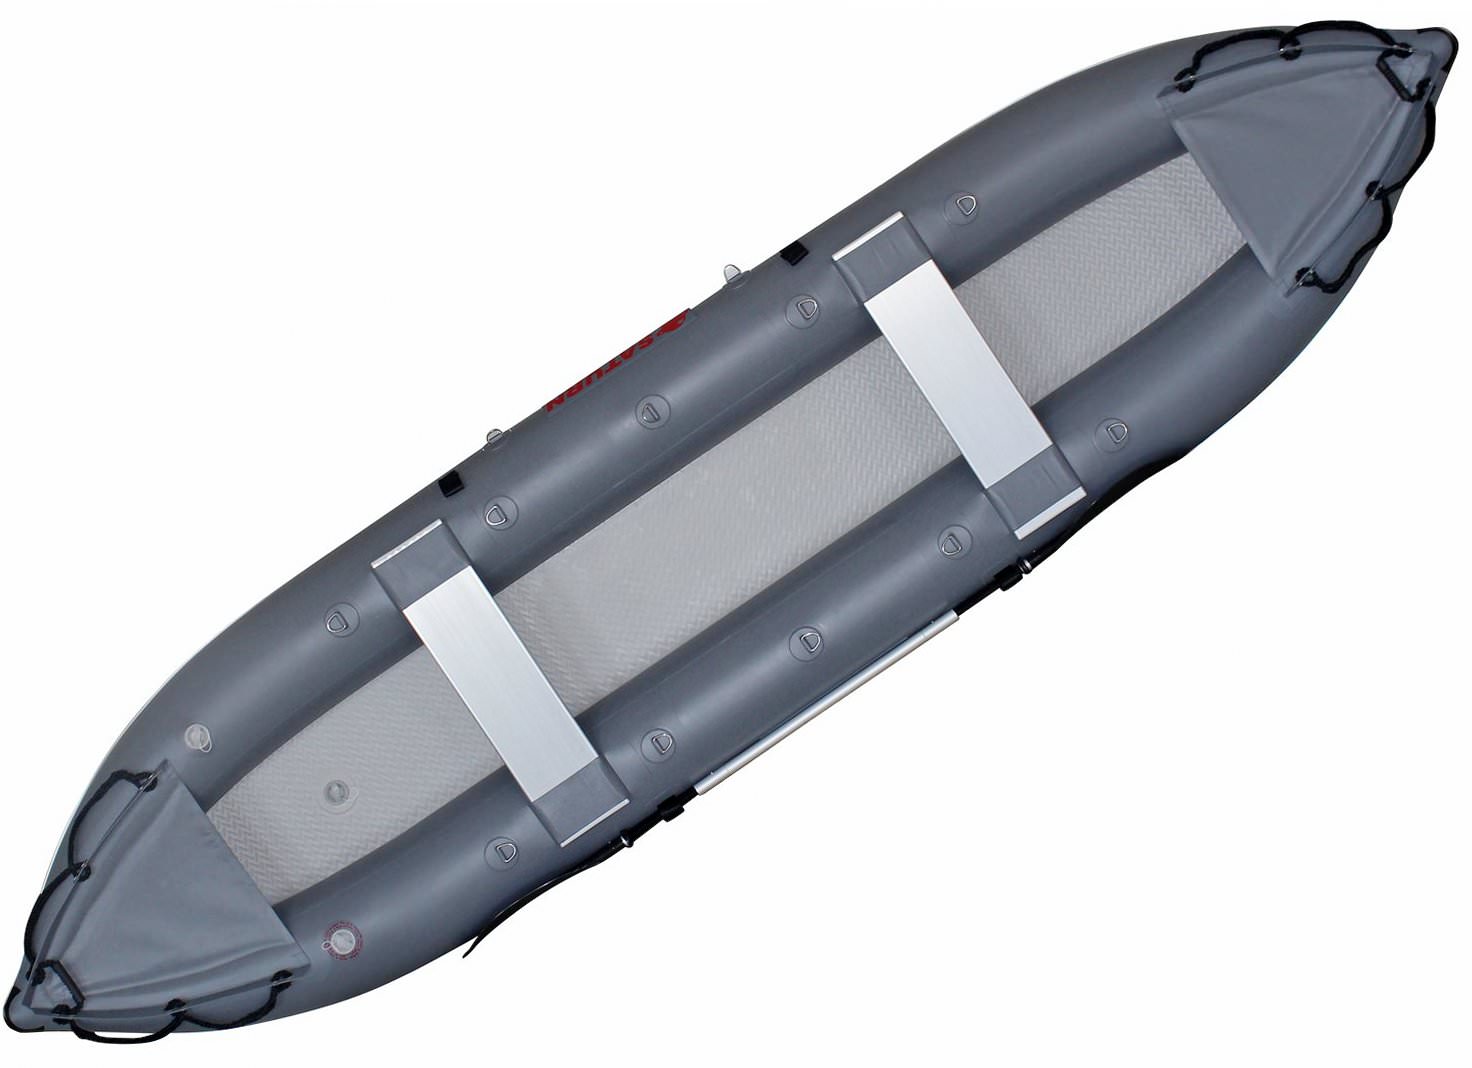 14' Fishing Inflatable Kayaks FK430